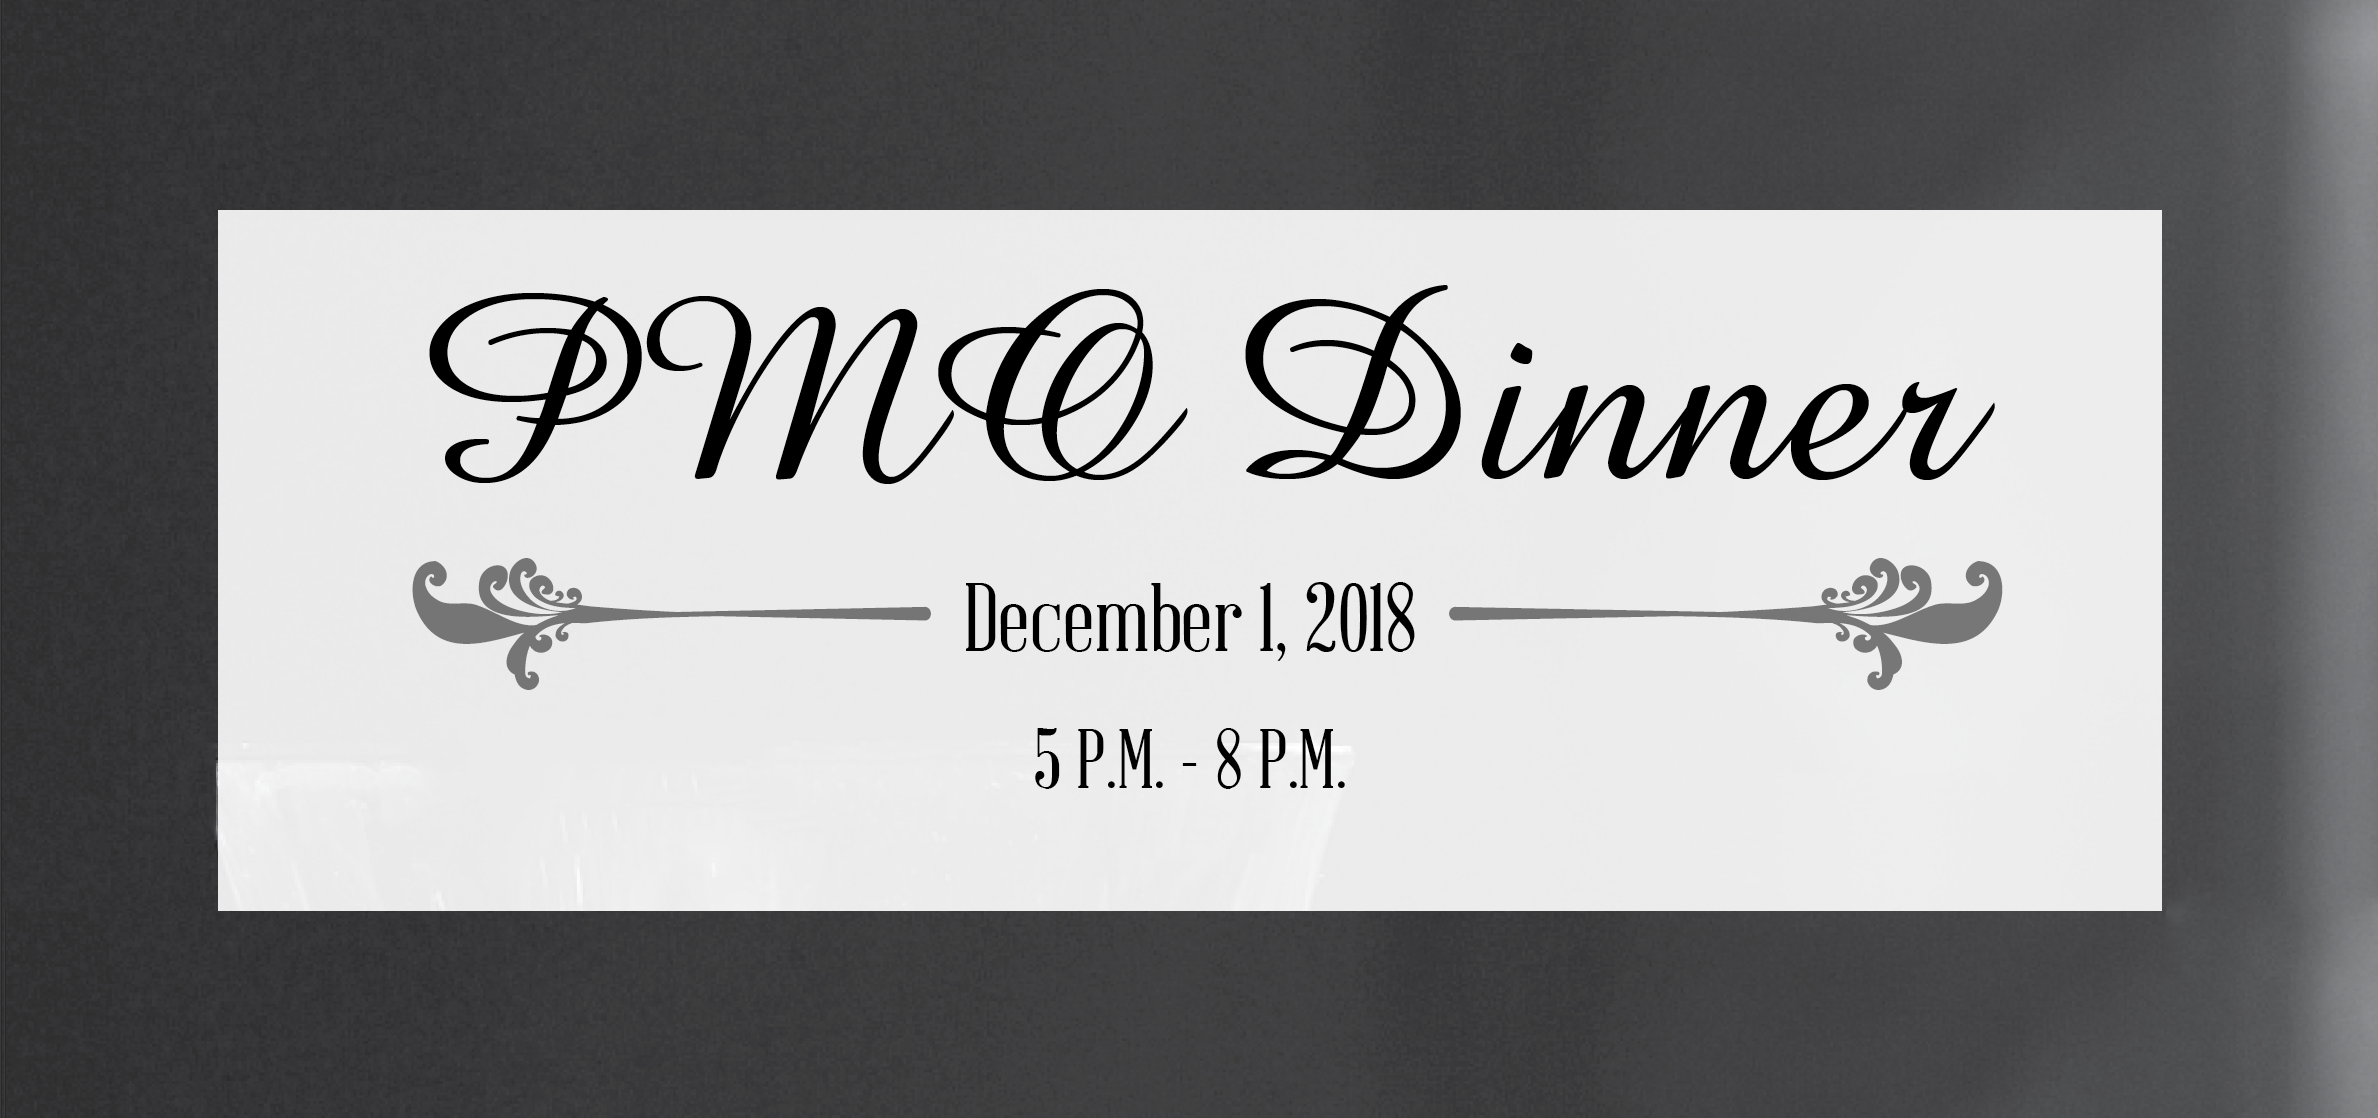 PMO Christmas Show Dinner Menu, December 1, 2018 from 5-8 p.m.